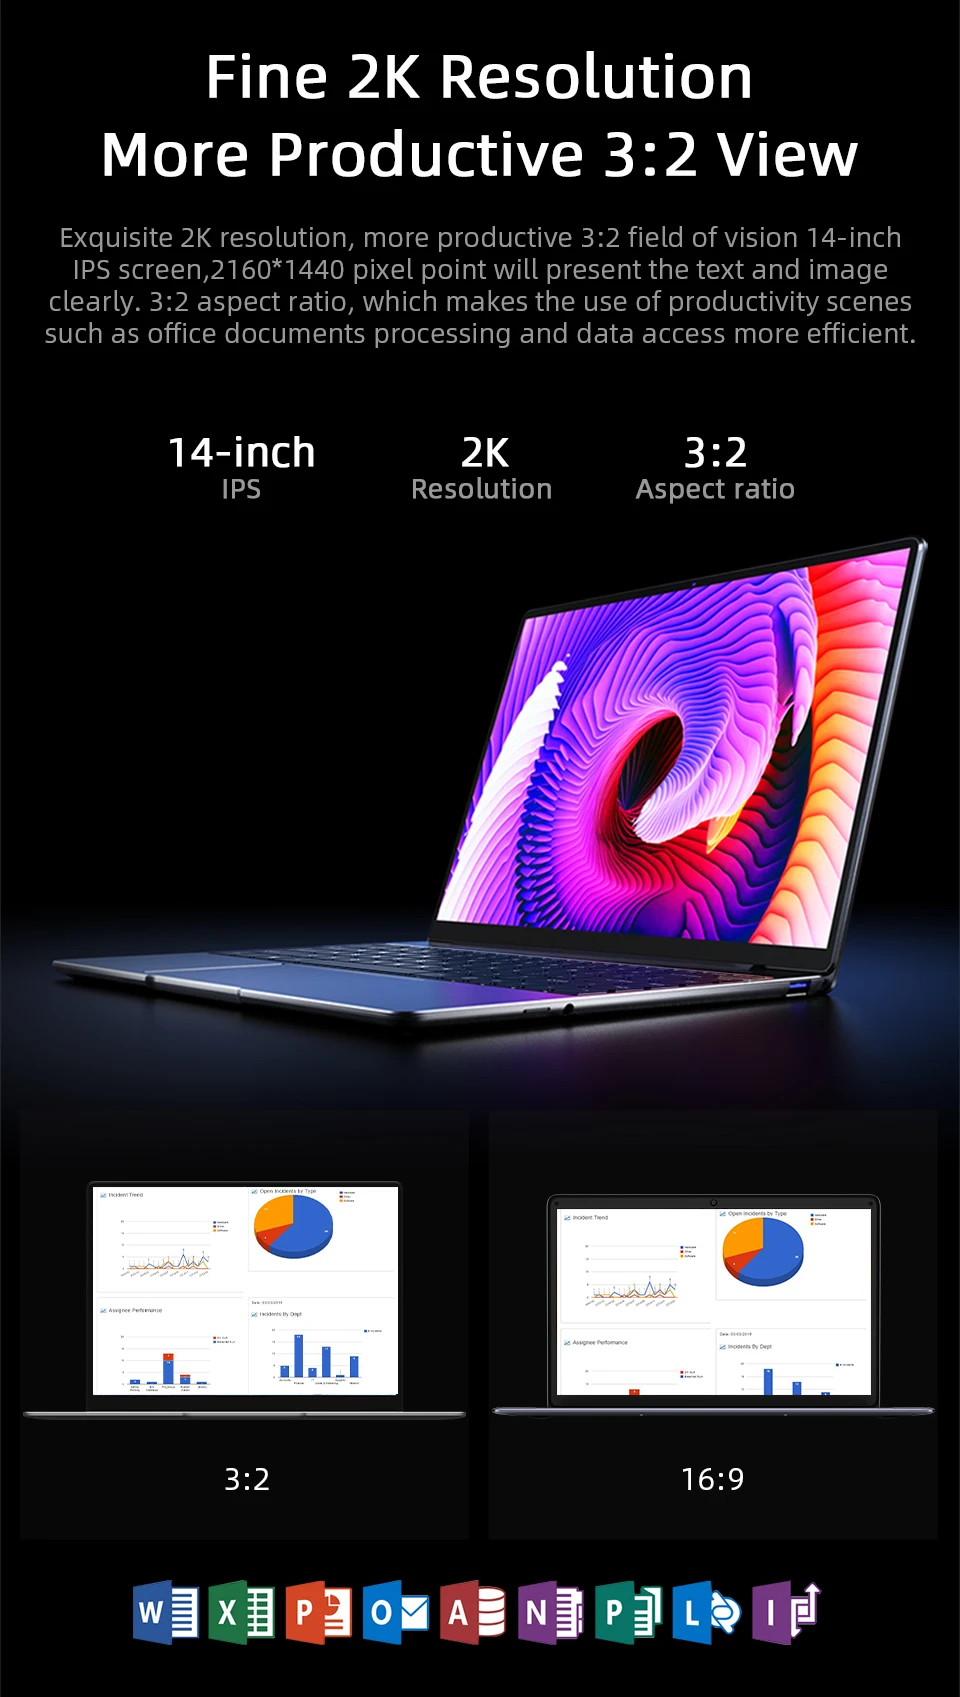 CHUWI GemiBook Pro 14 inch 2K Screen Laptop 8GB RAM 256GB SSD Intel Celeron Quad Core Windows 10 Computer with Backlit Keyboard